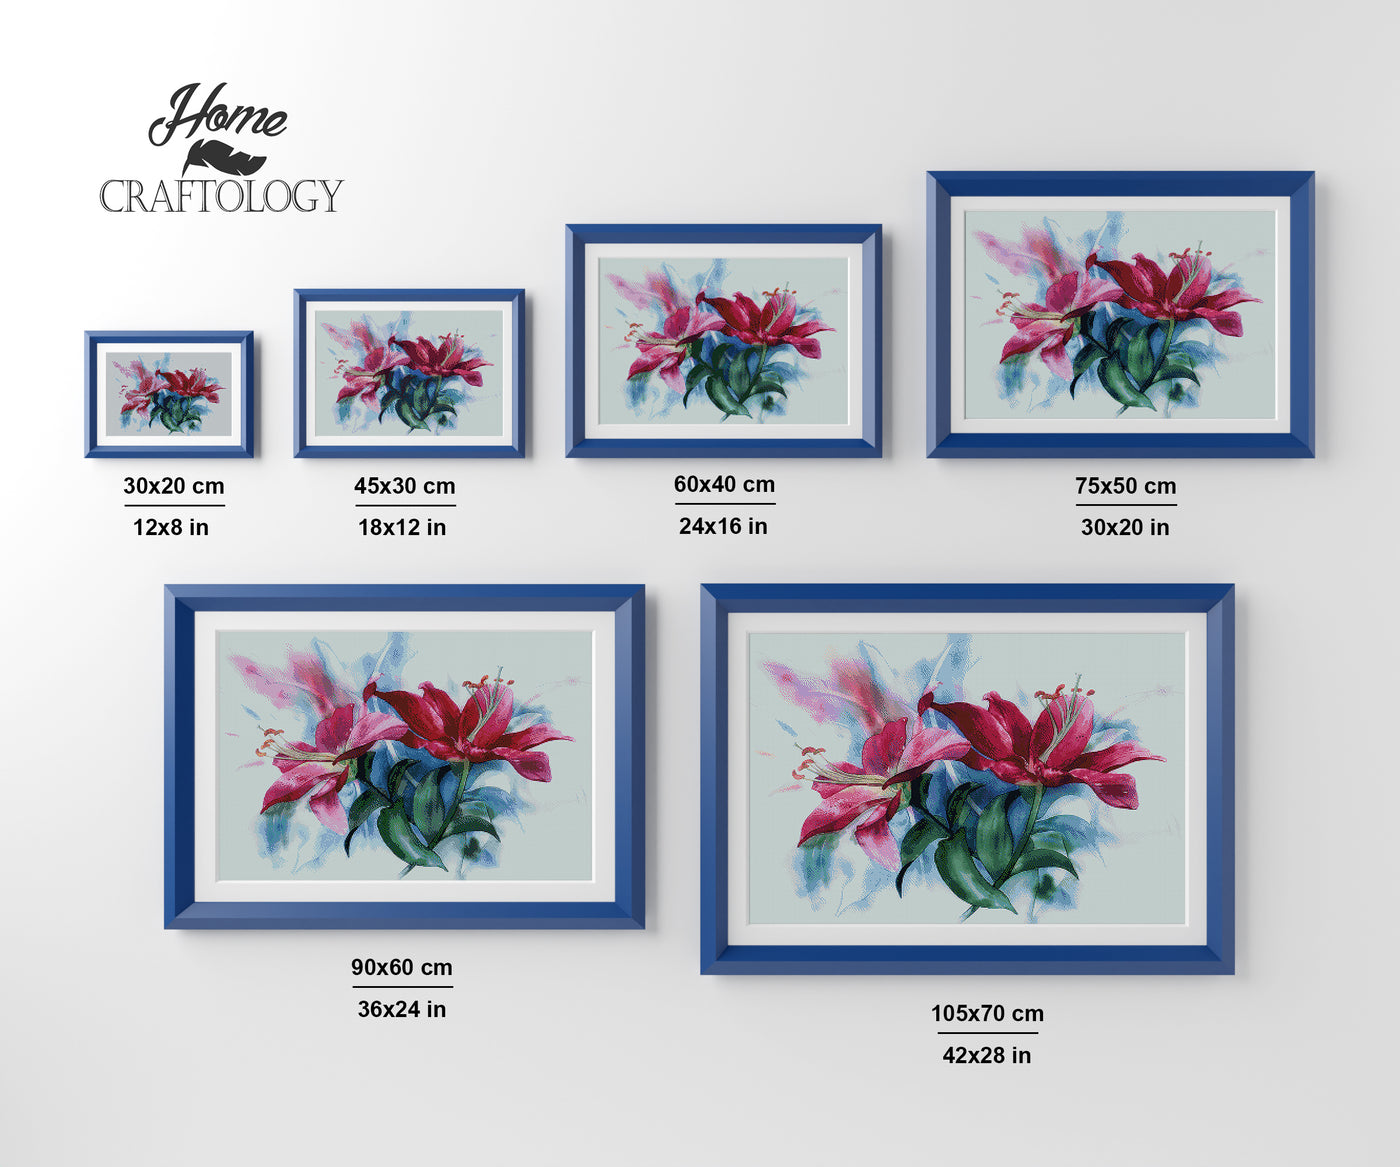 Watercolor Lilies - Premium Diamond Painting Kit